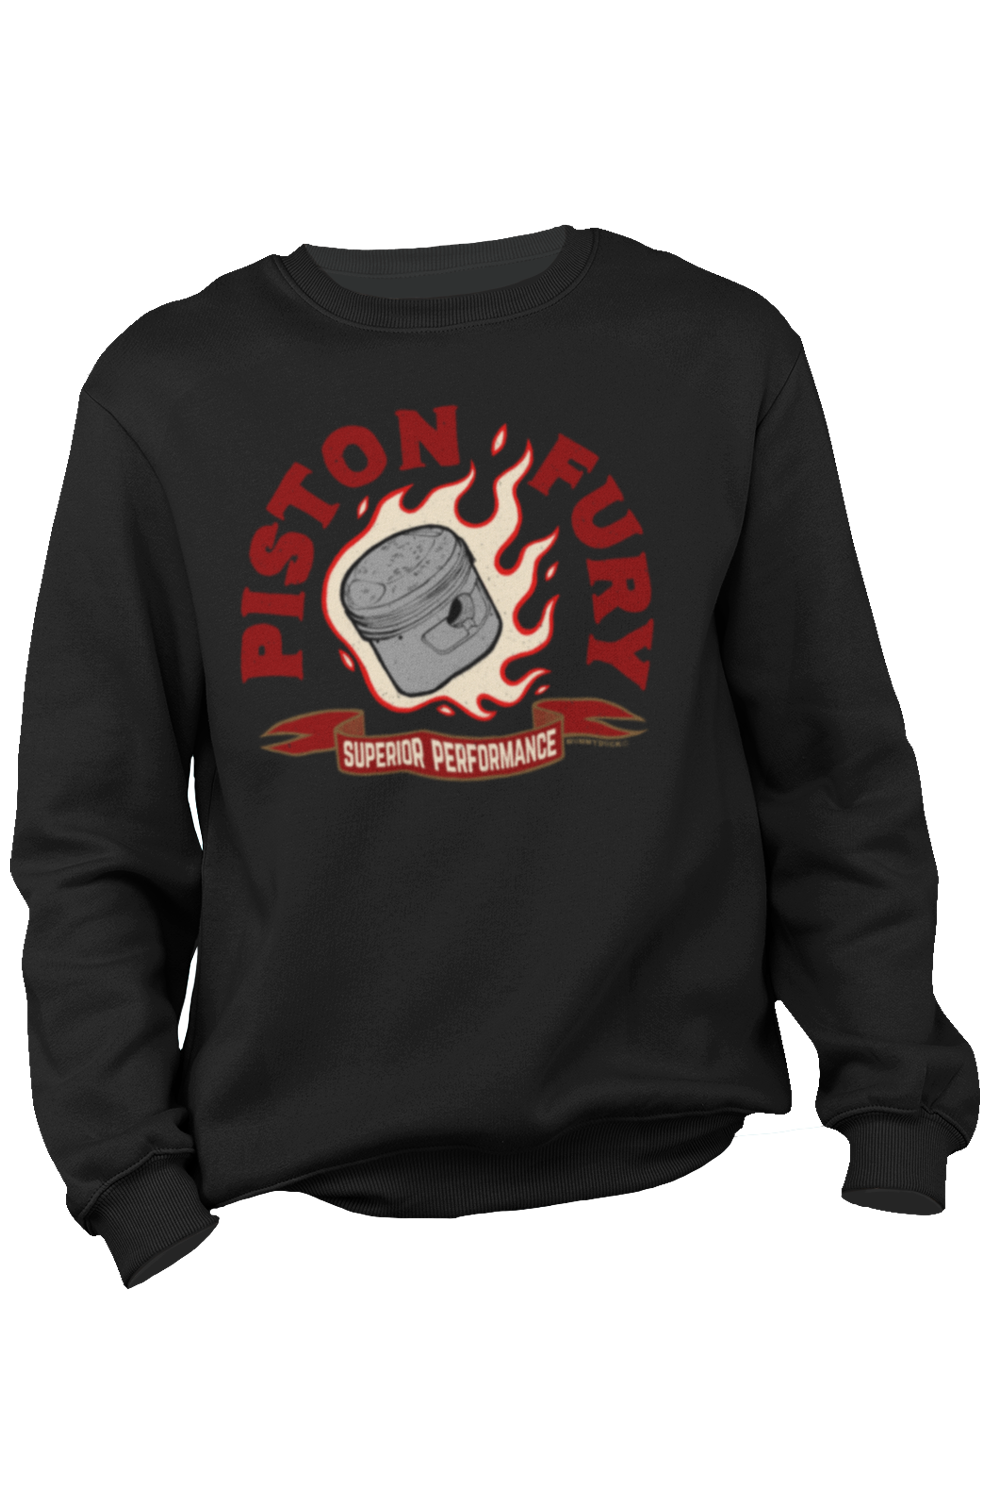 Piston fury motorcycle sweatshirt by Mummyduck Customs